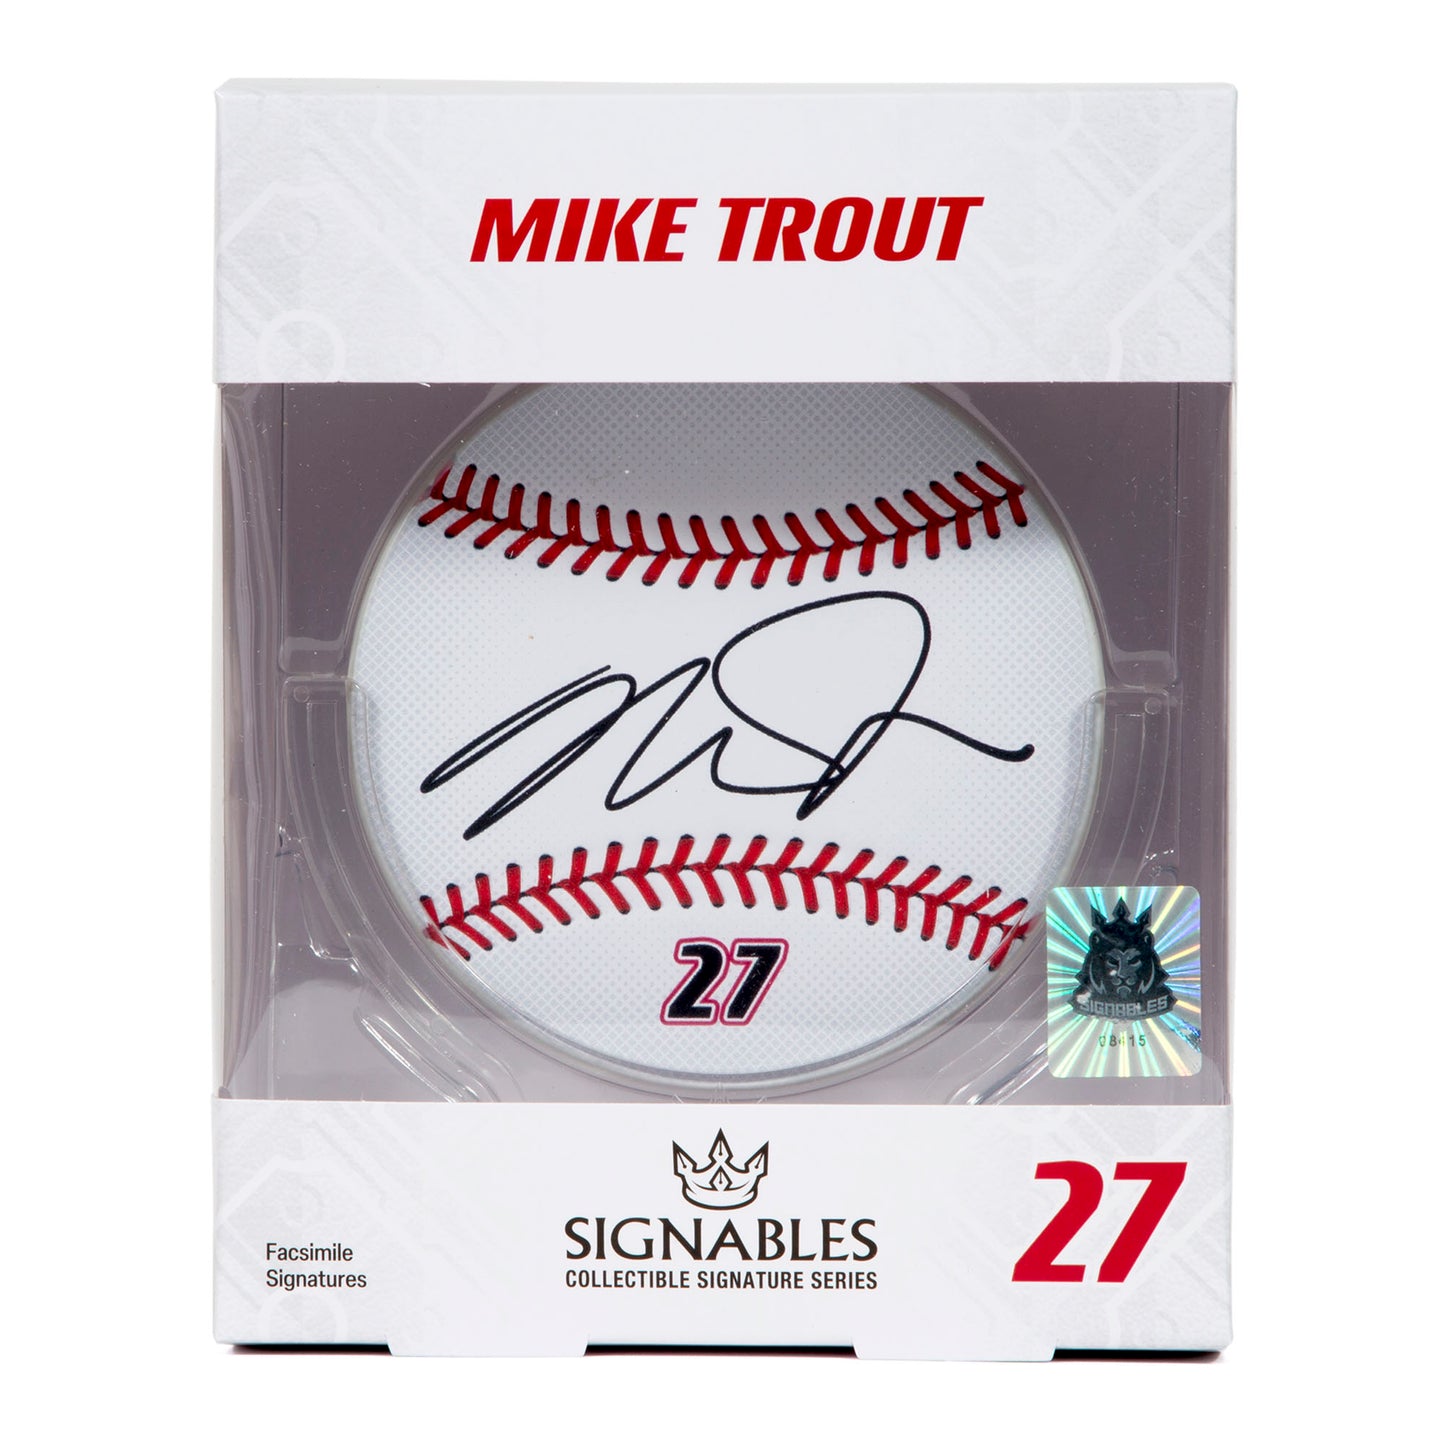 Mike Trout MLBPA Signables Baseball Sports Collectible Digitally Signed